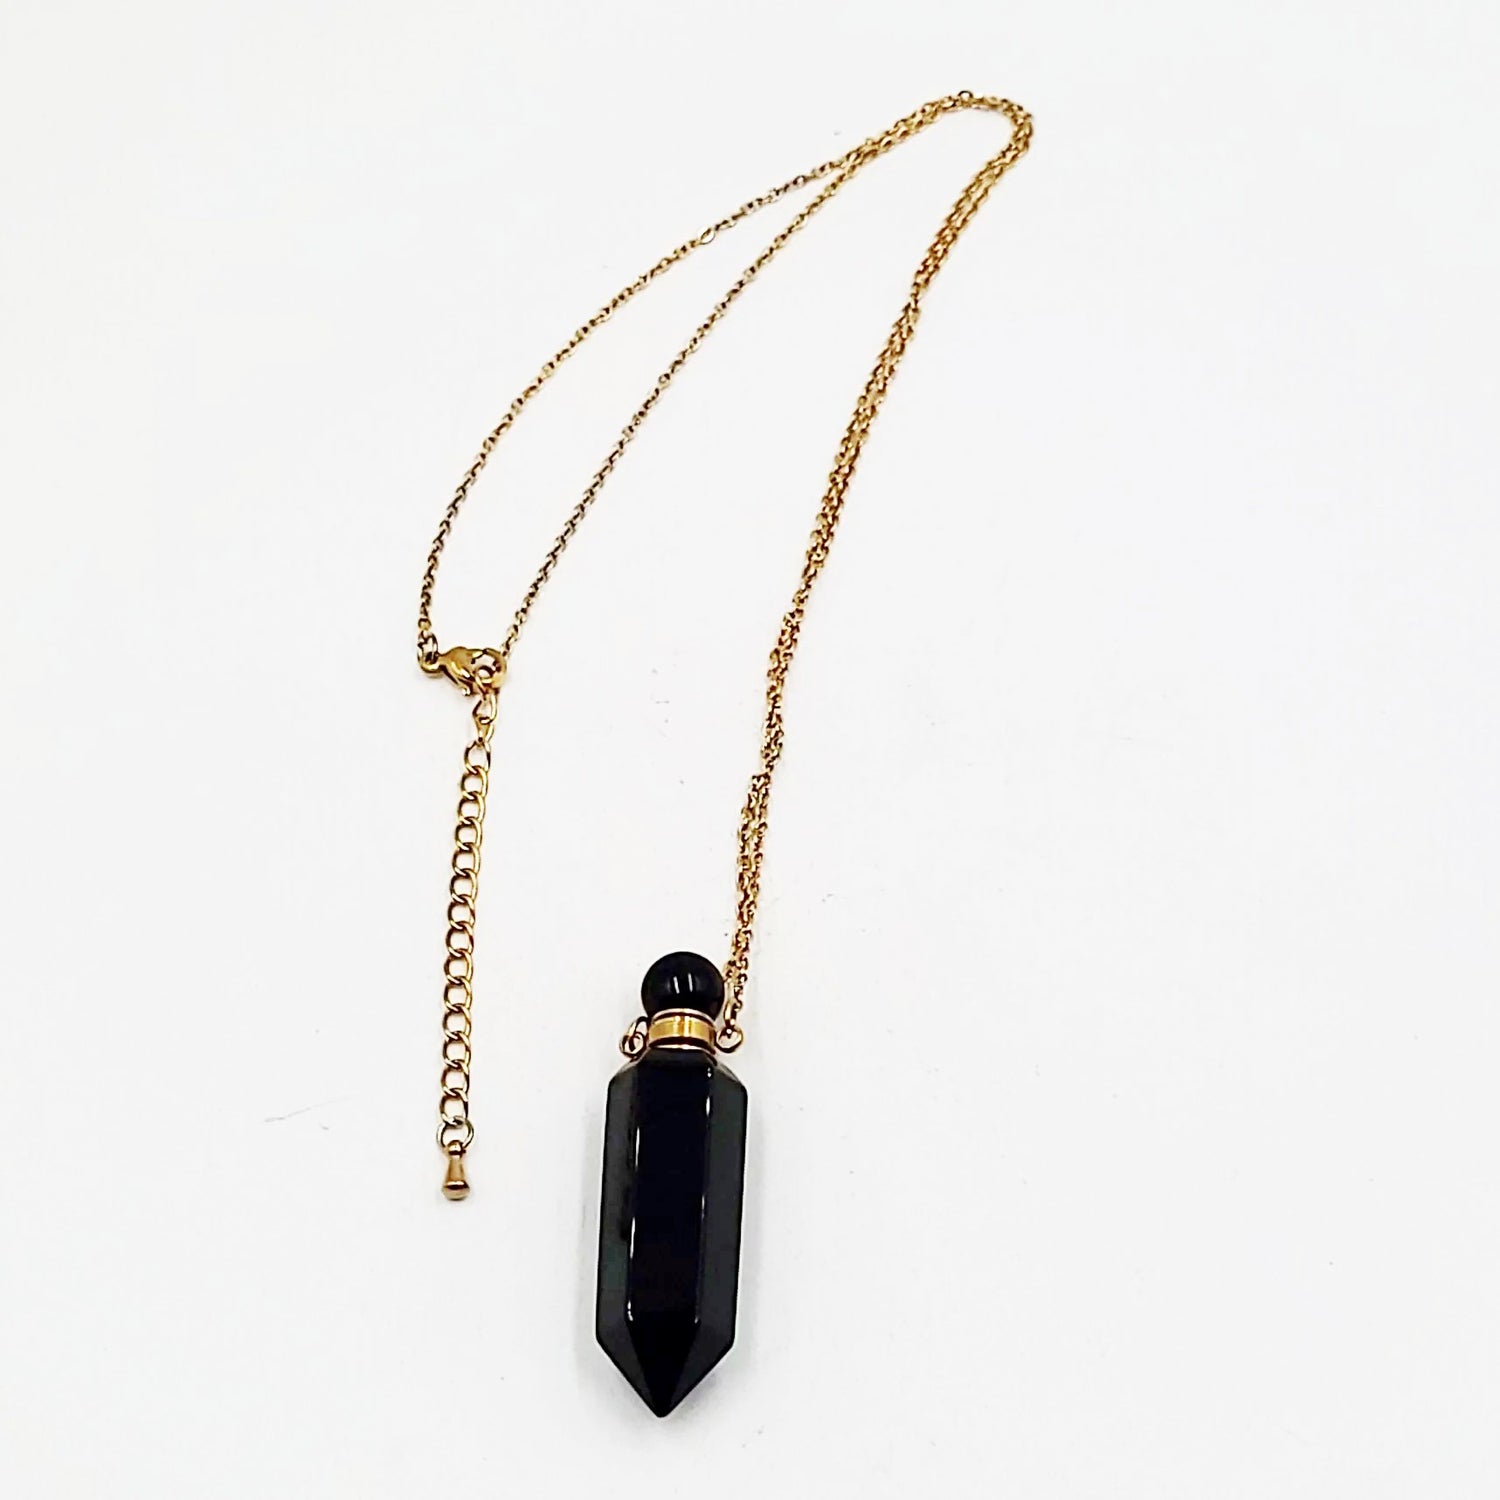 Black Obsidian Bottle Pendant Necklace Holder Perfume Oils Incense Ashes - Elevated Metaphysical